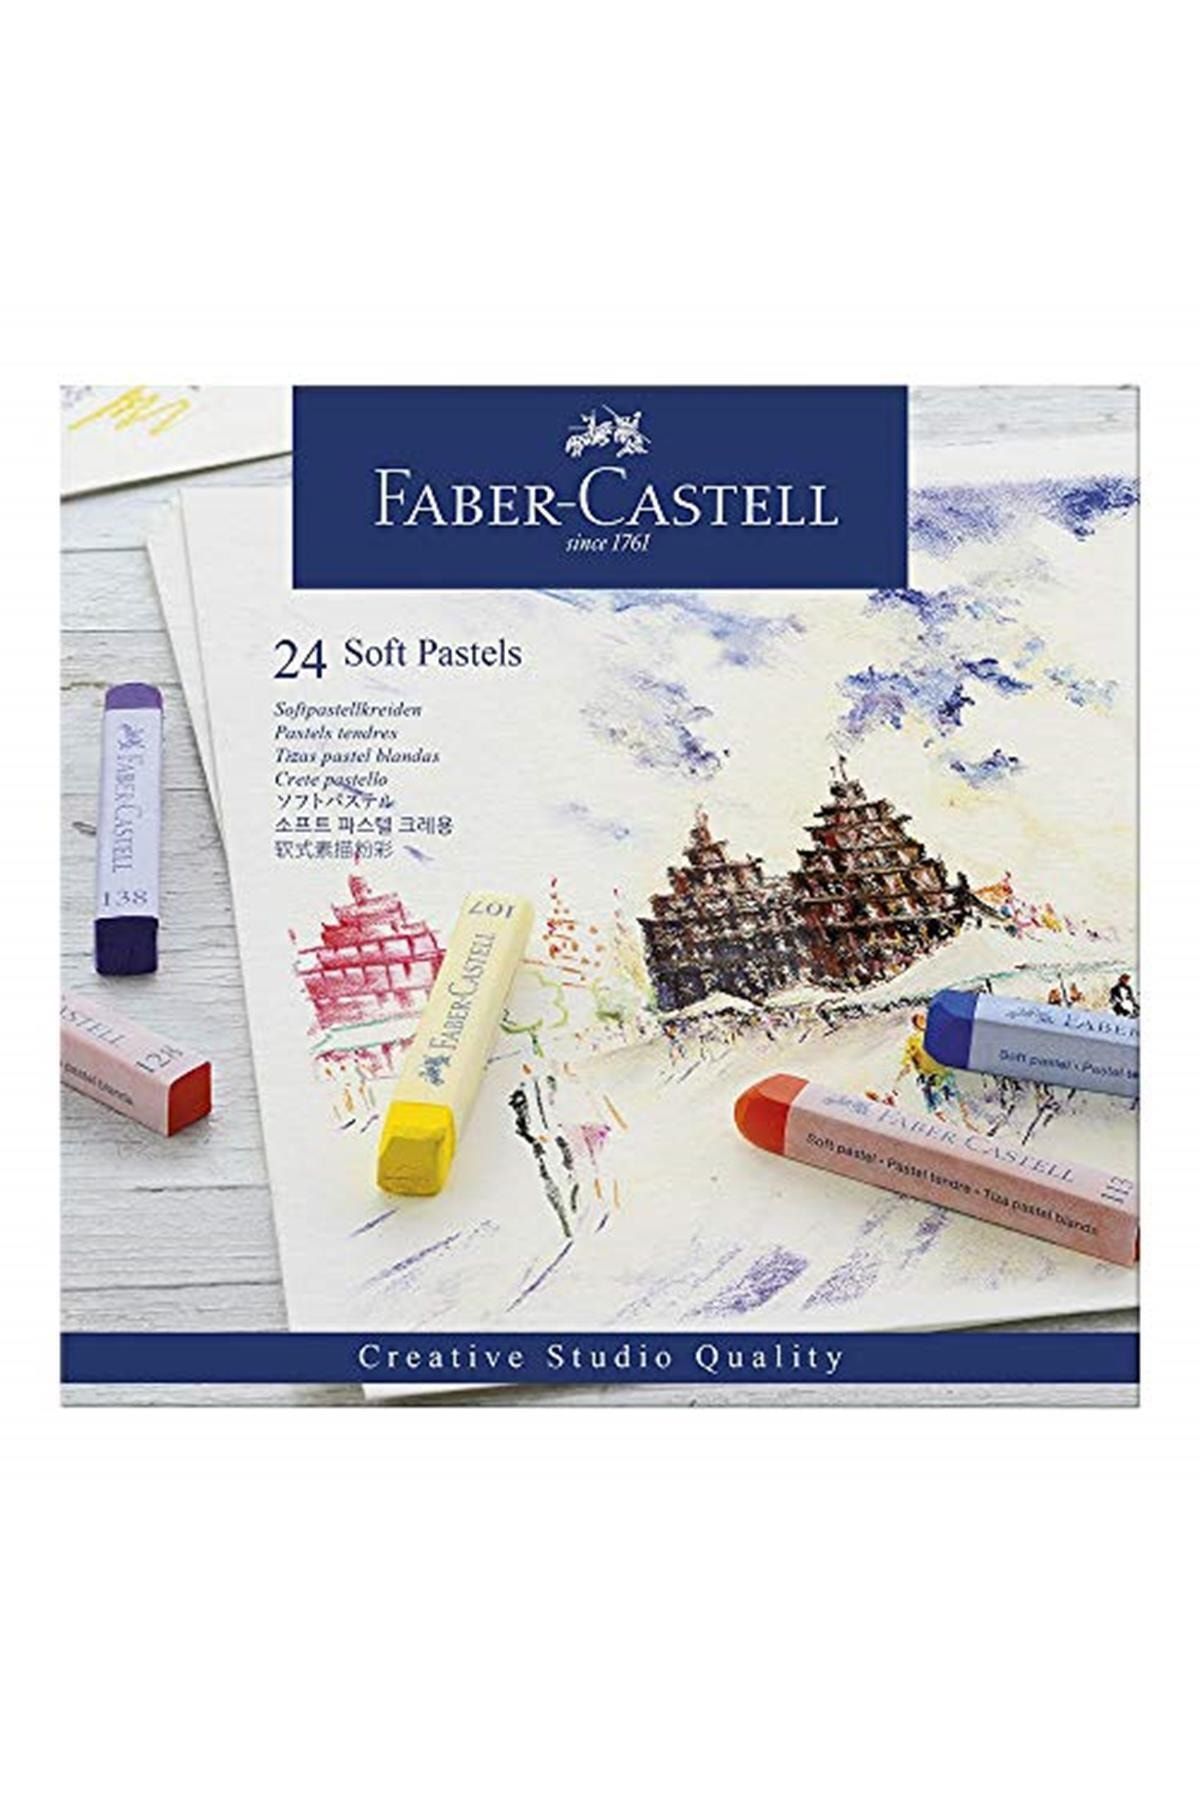 Faber Castell Faber-castell Creative Studio Toz Pastel Boya, Soft, 24 Renk